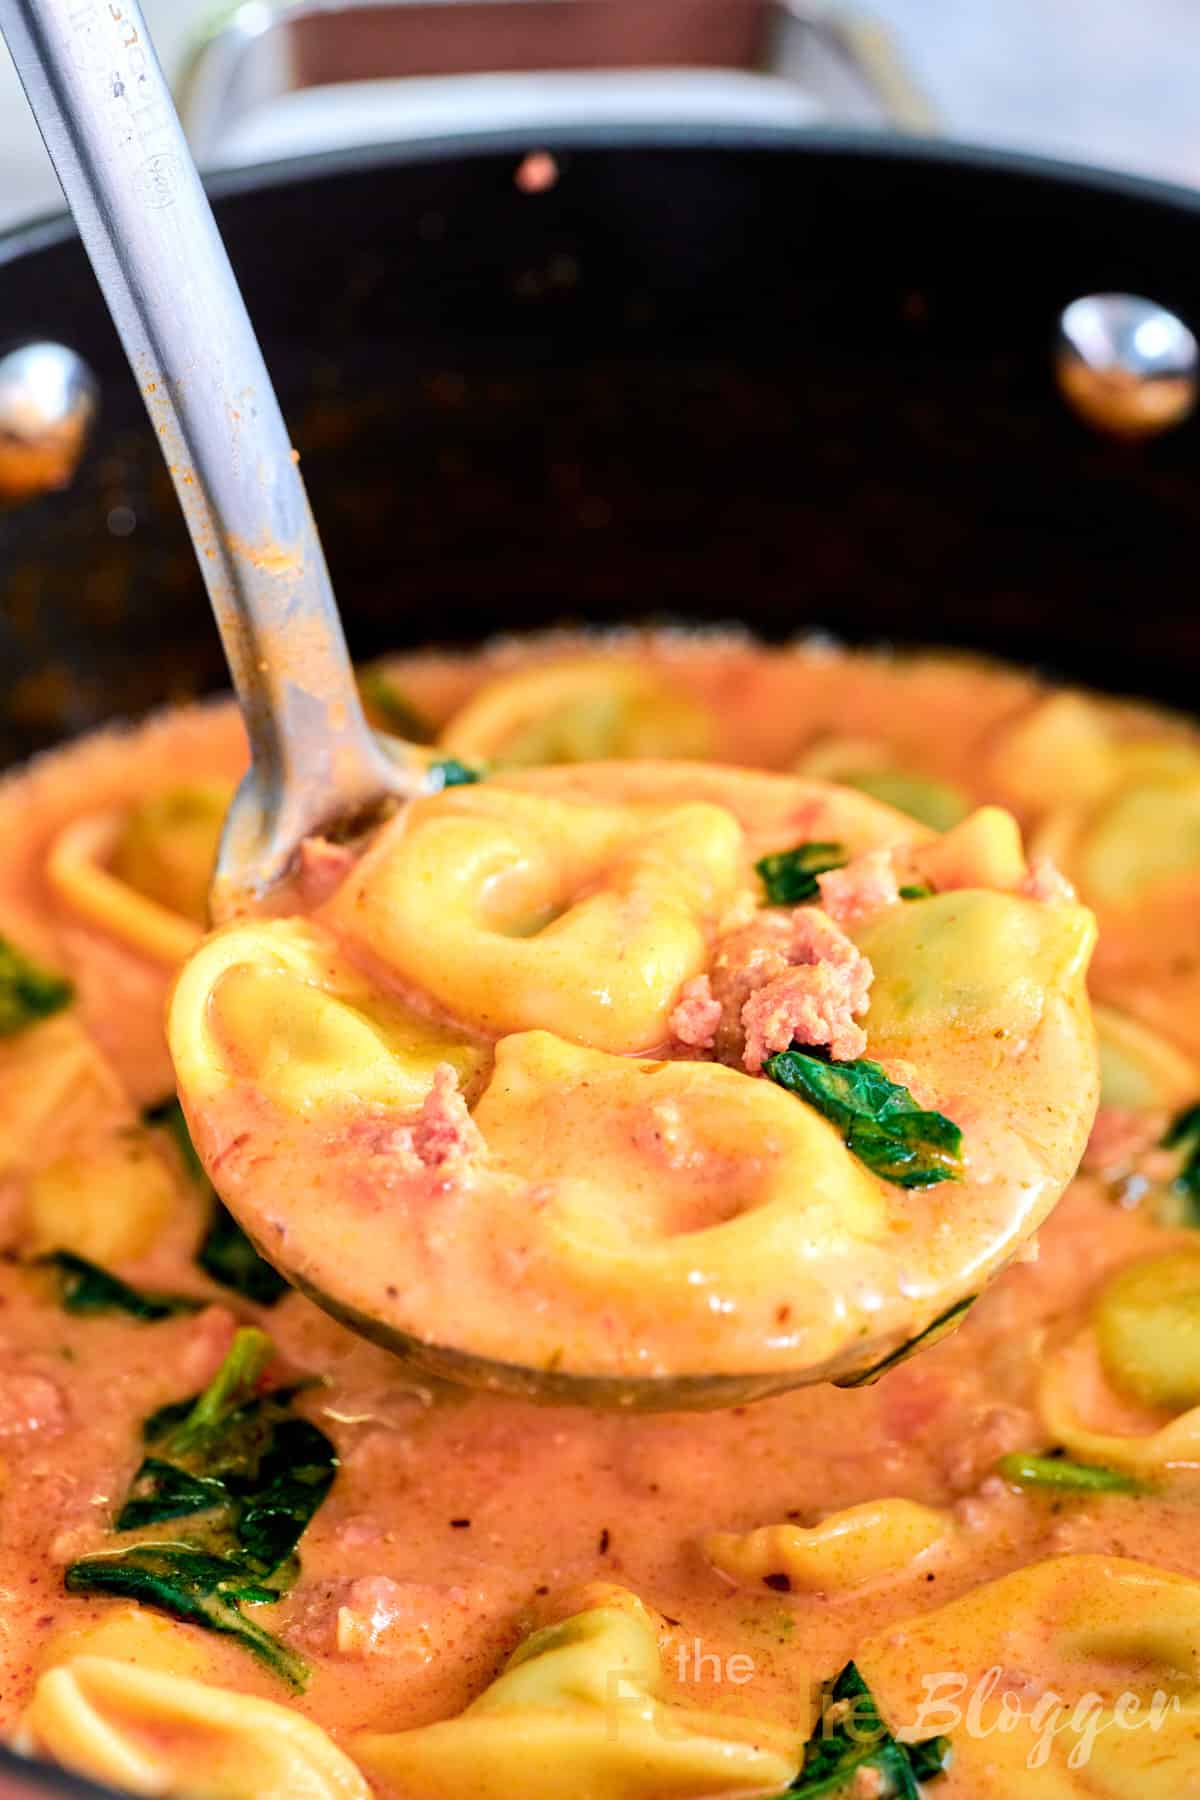 thefoodieblogger creamy sausage tortellini soup 3